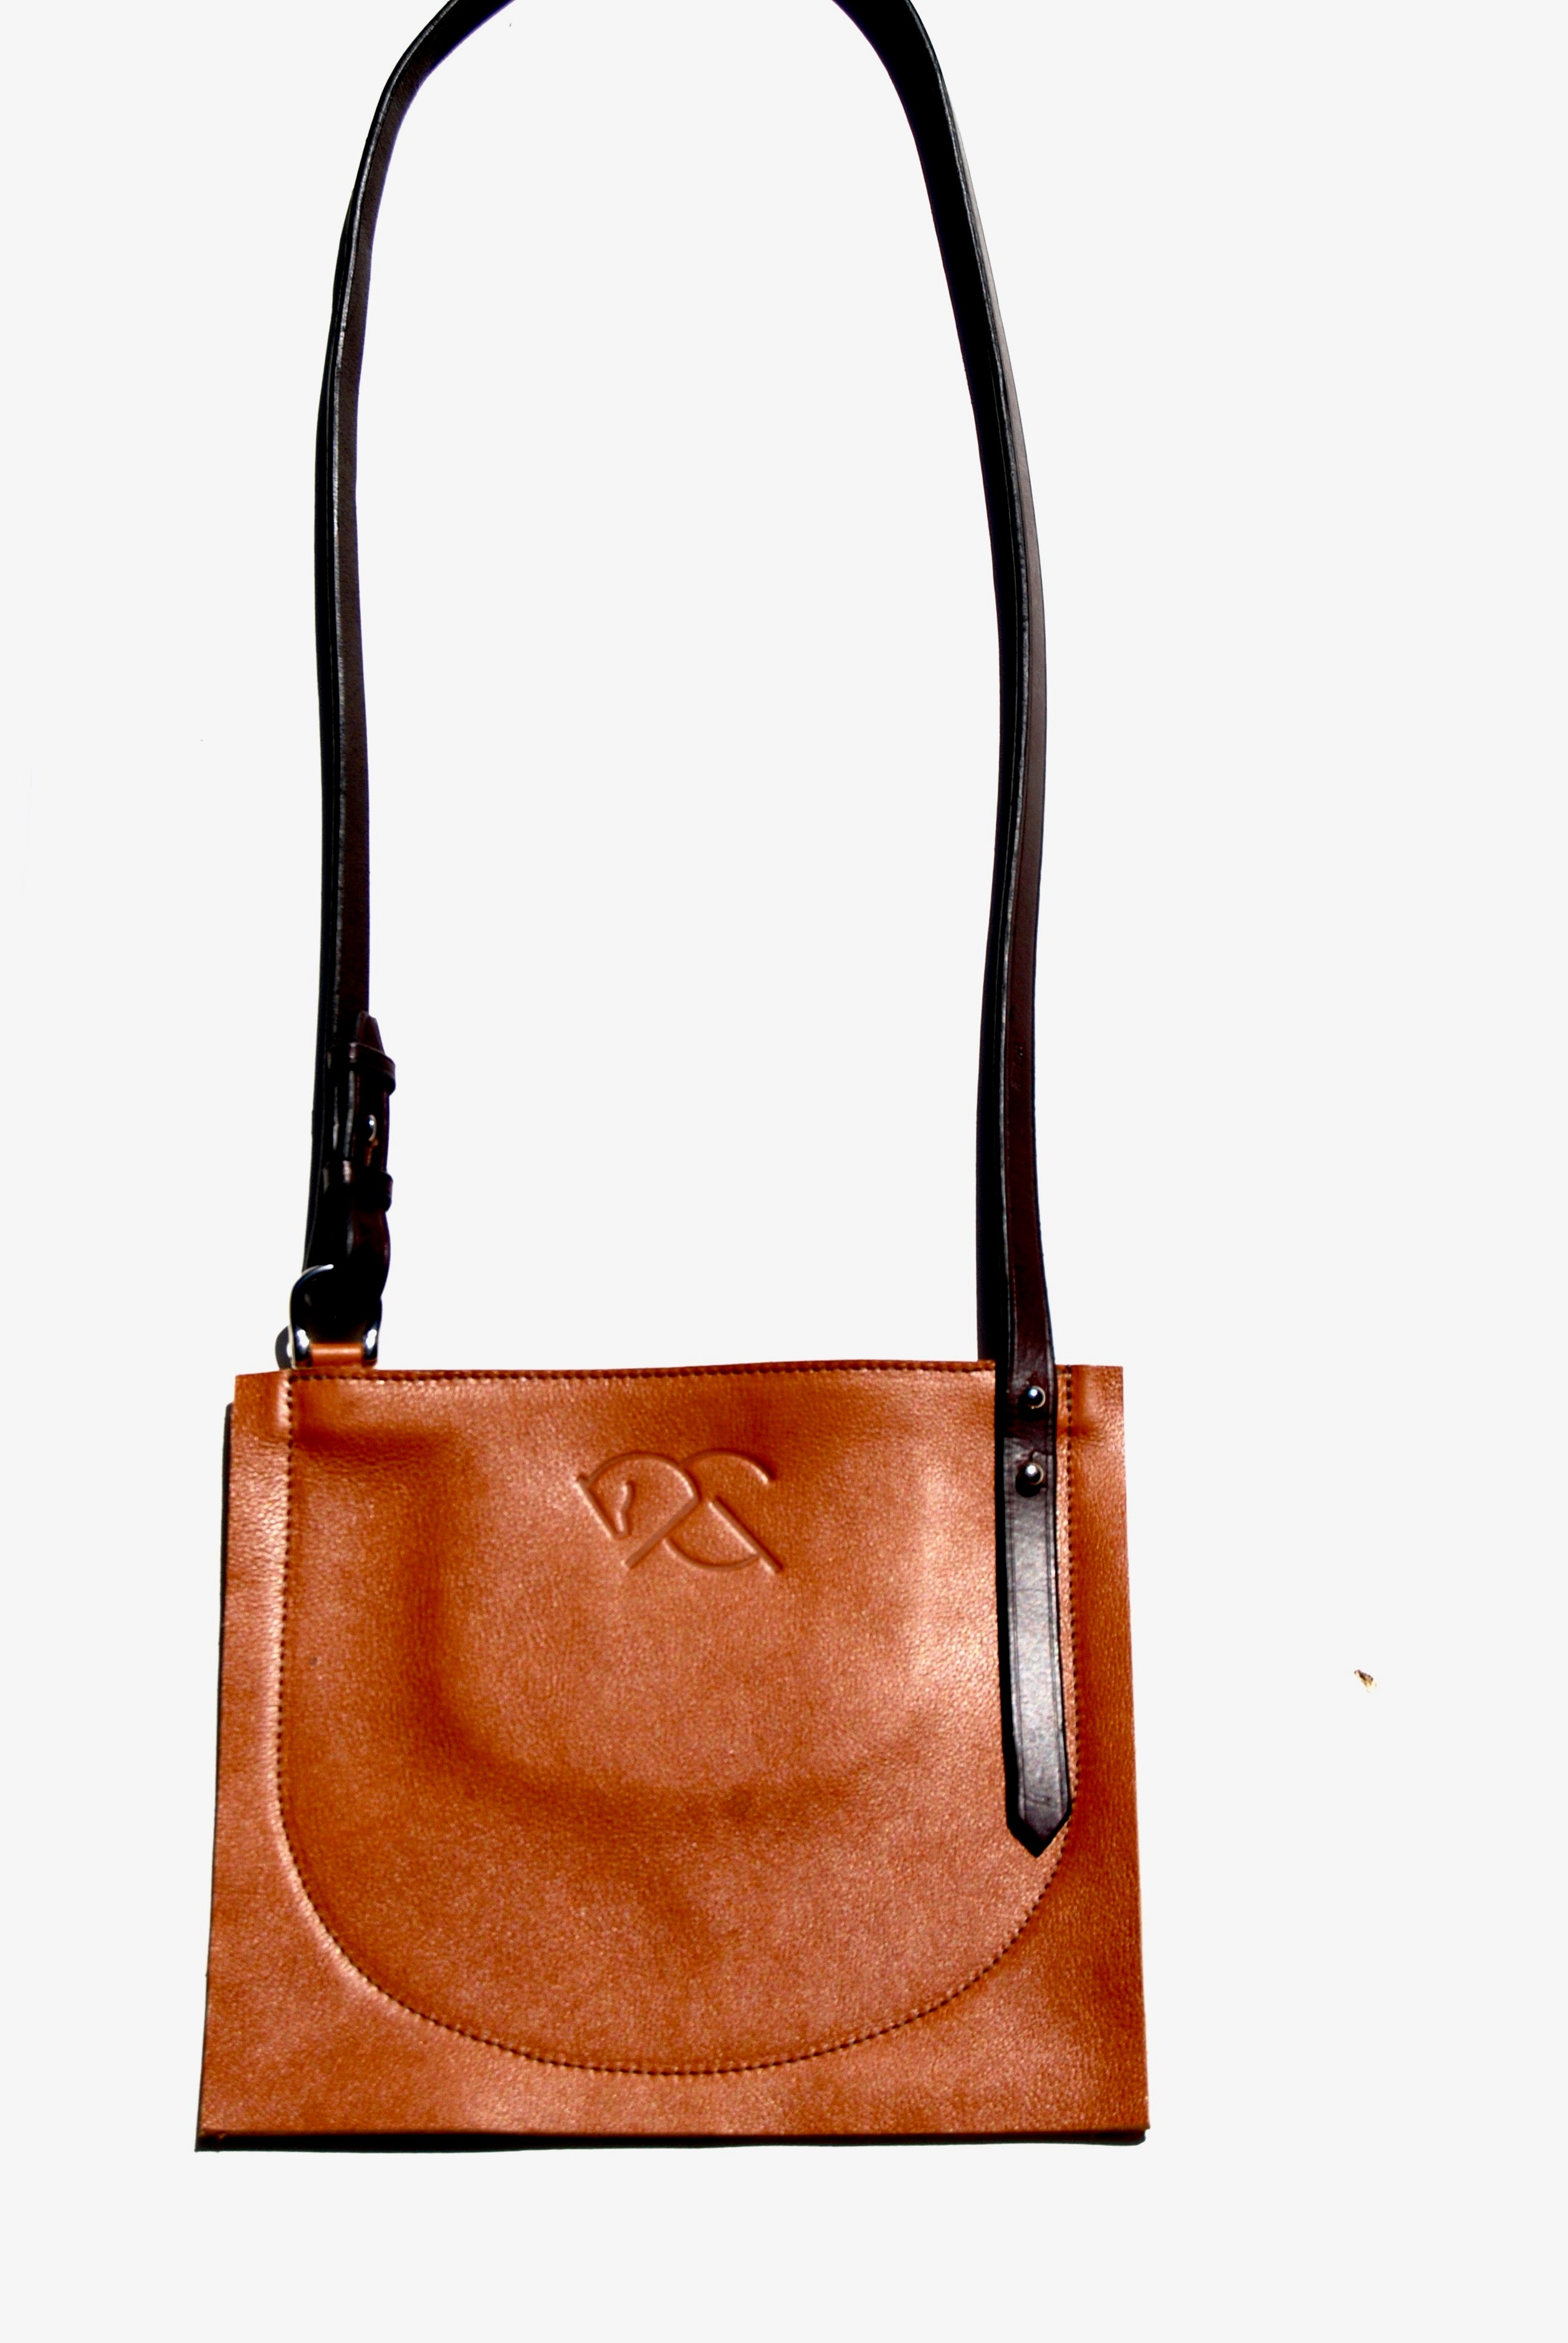 PINTALOSSA SHOULDER BAG in red dun | Equestrain hand bag | Cross Body Bridal Bag - AtelierCG™